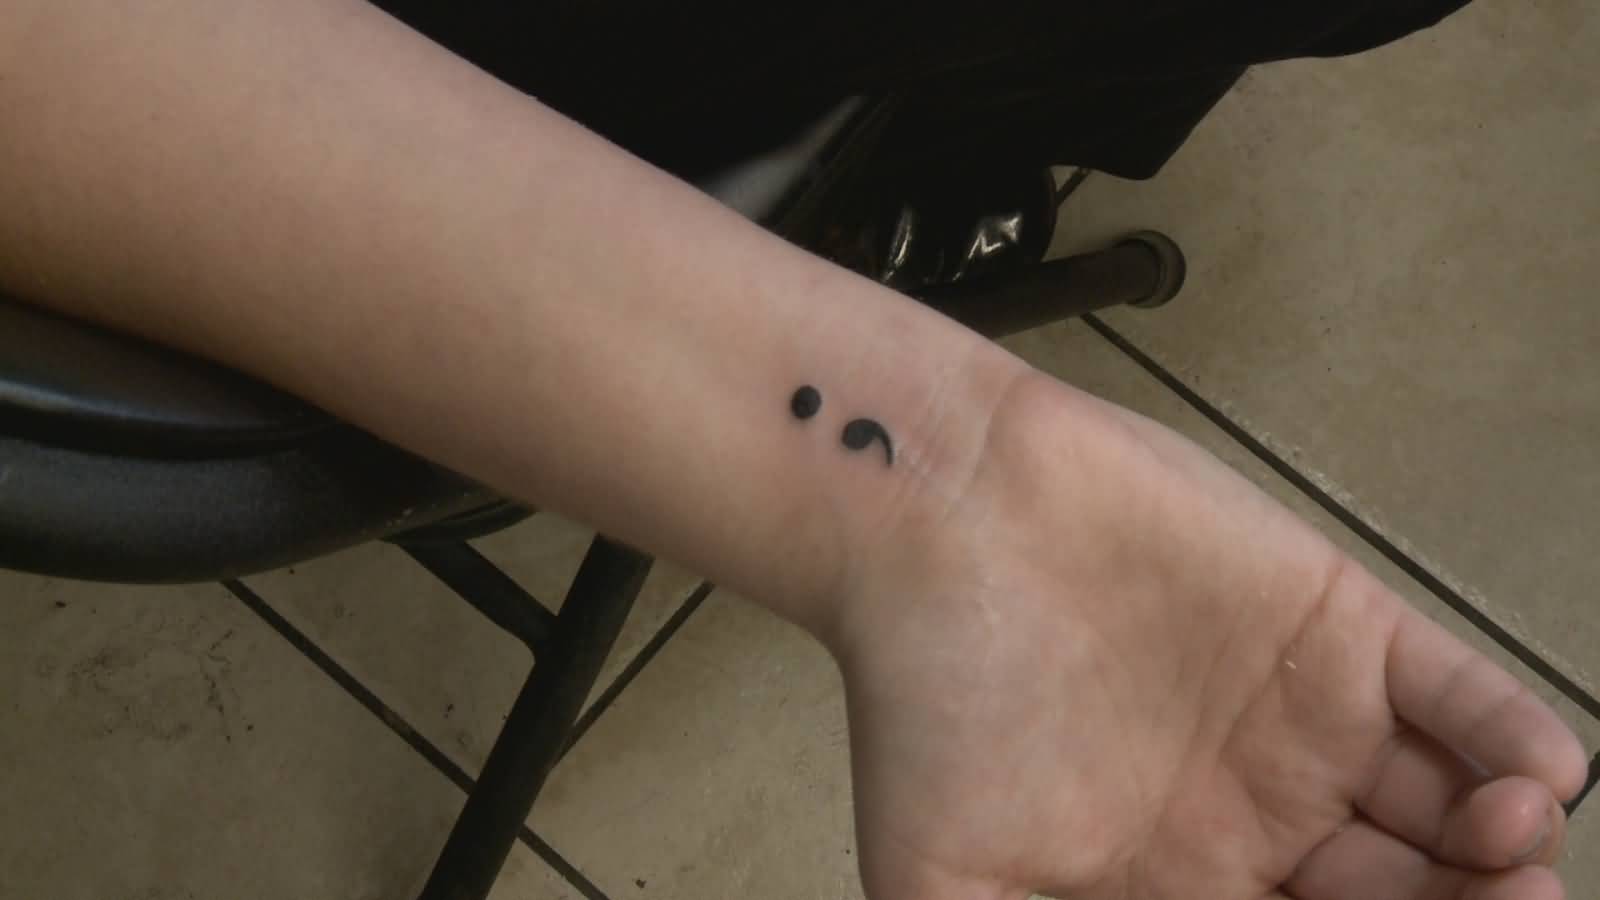 Right Wrist Black Semicolon Tattoo